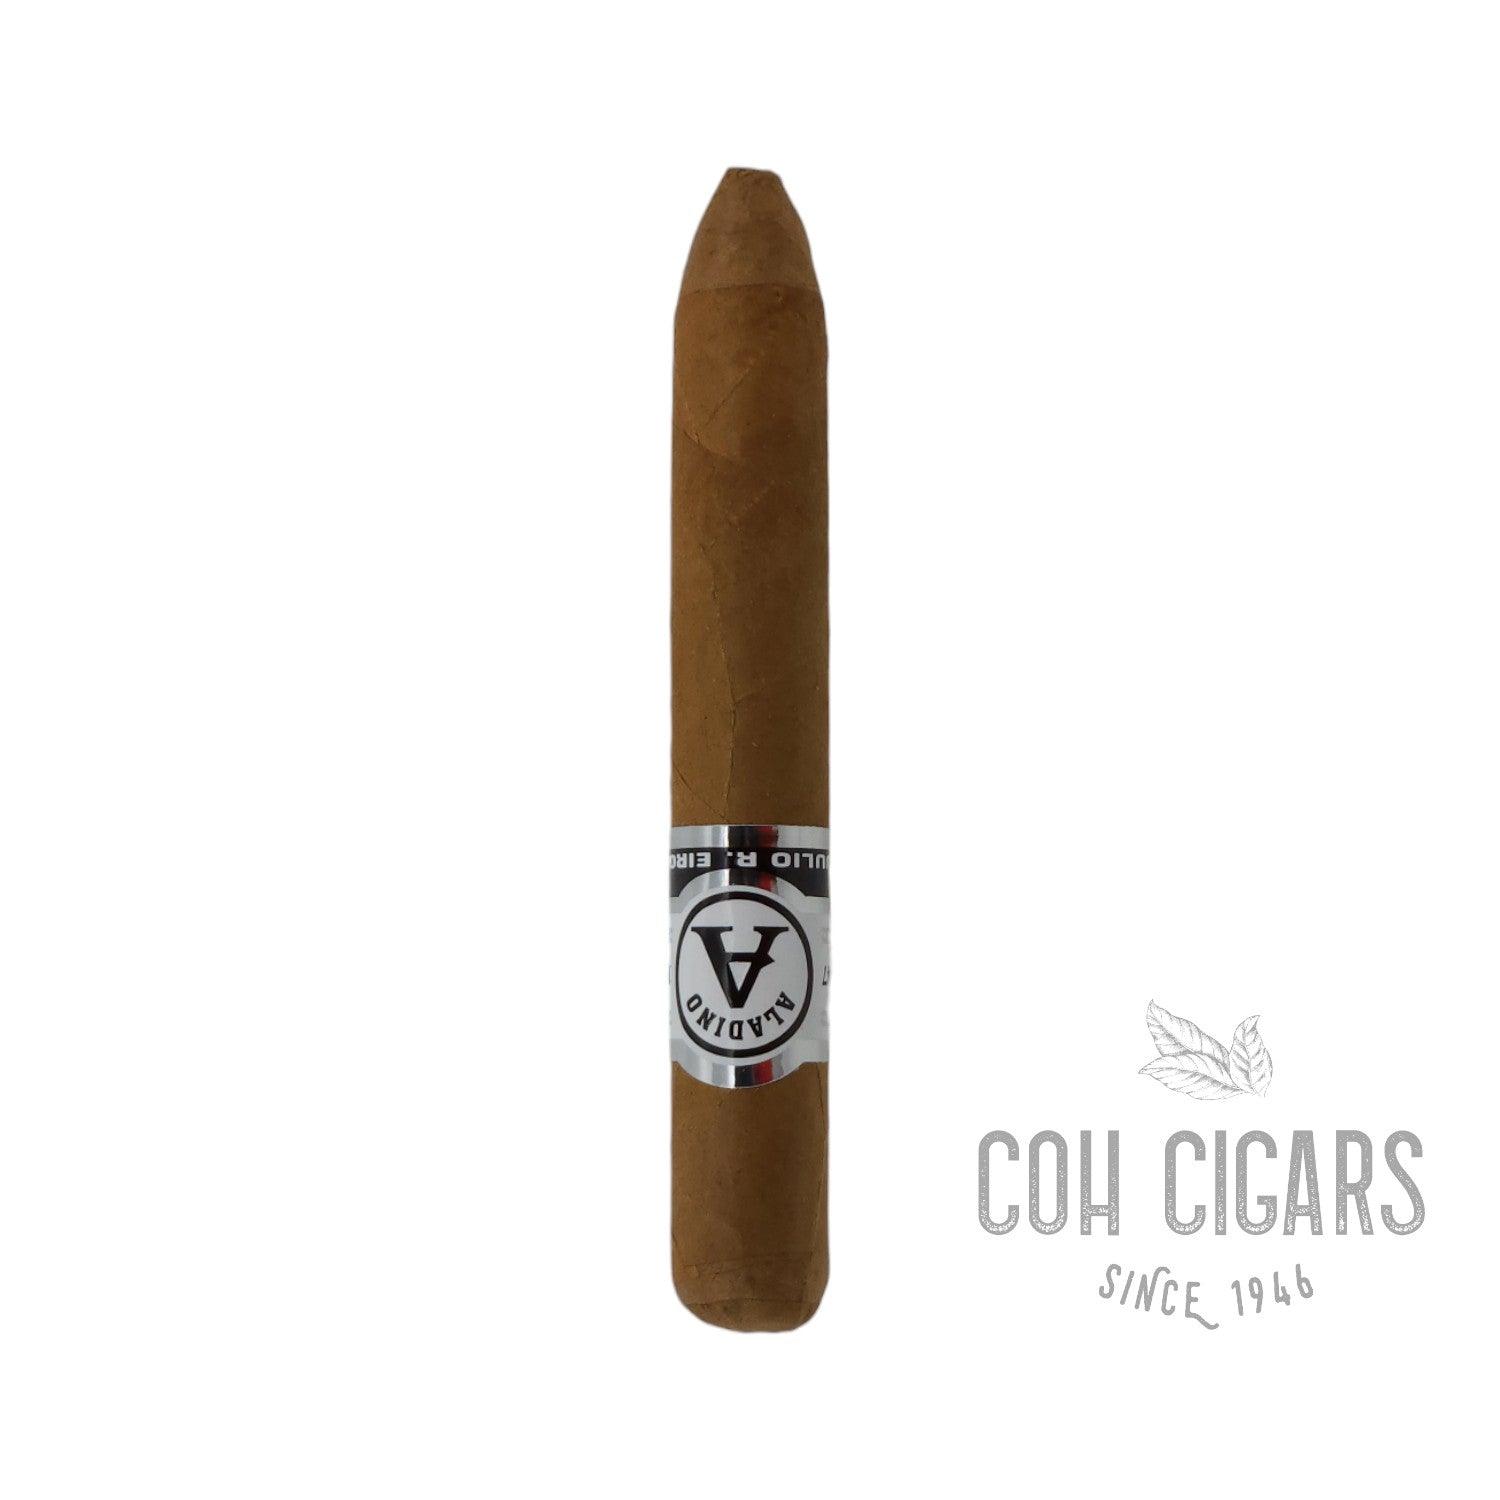 Aladino Cigar | JRE Tobacco Farm Queens | Box 20 - hk.cohcigars